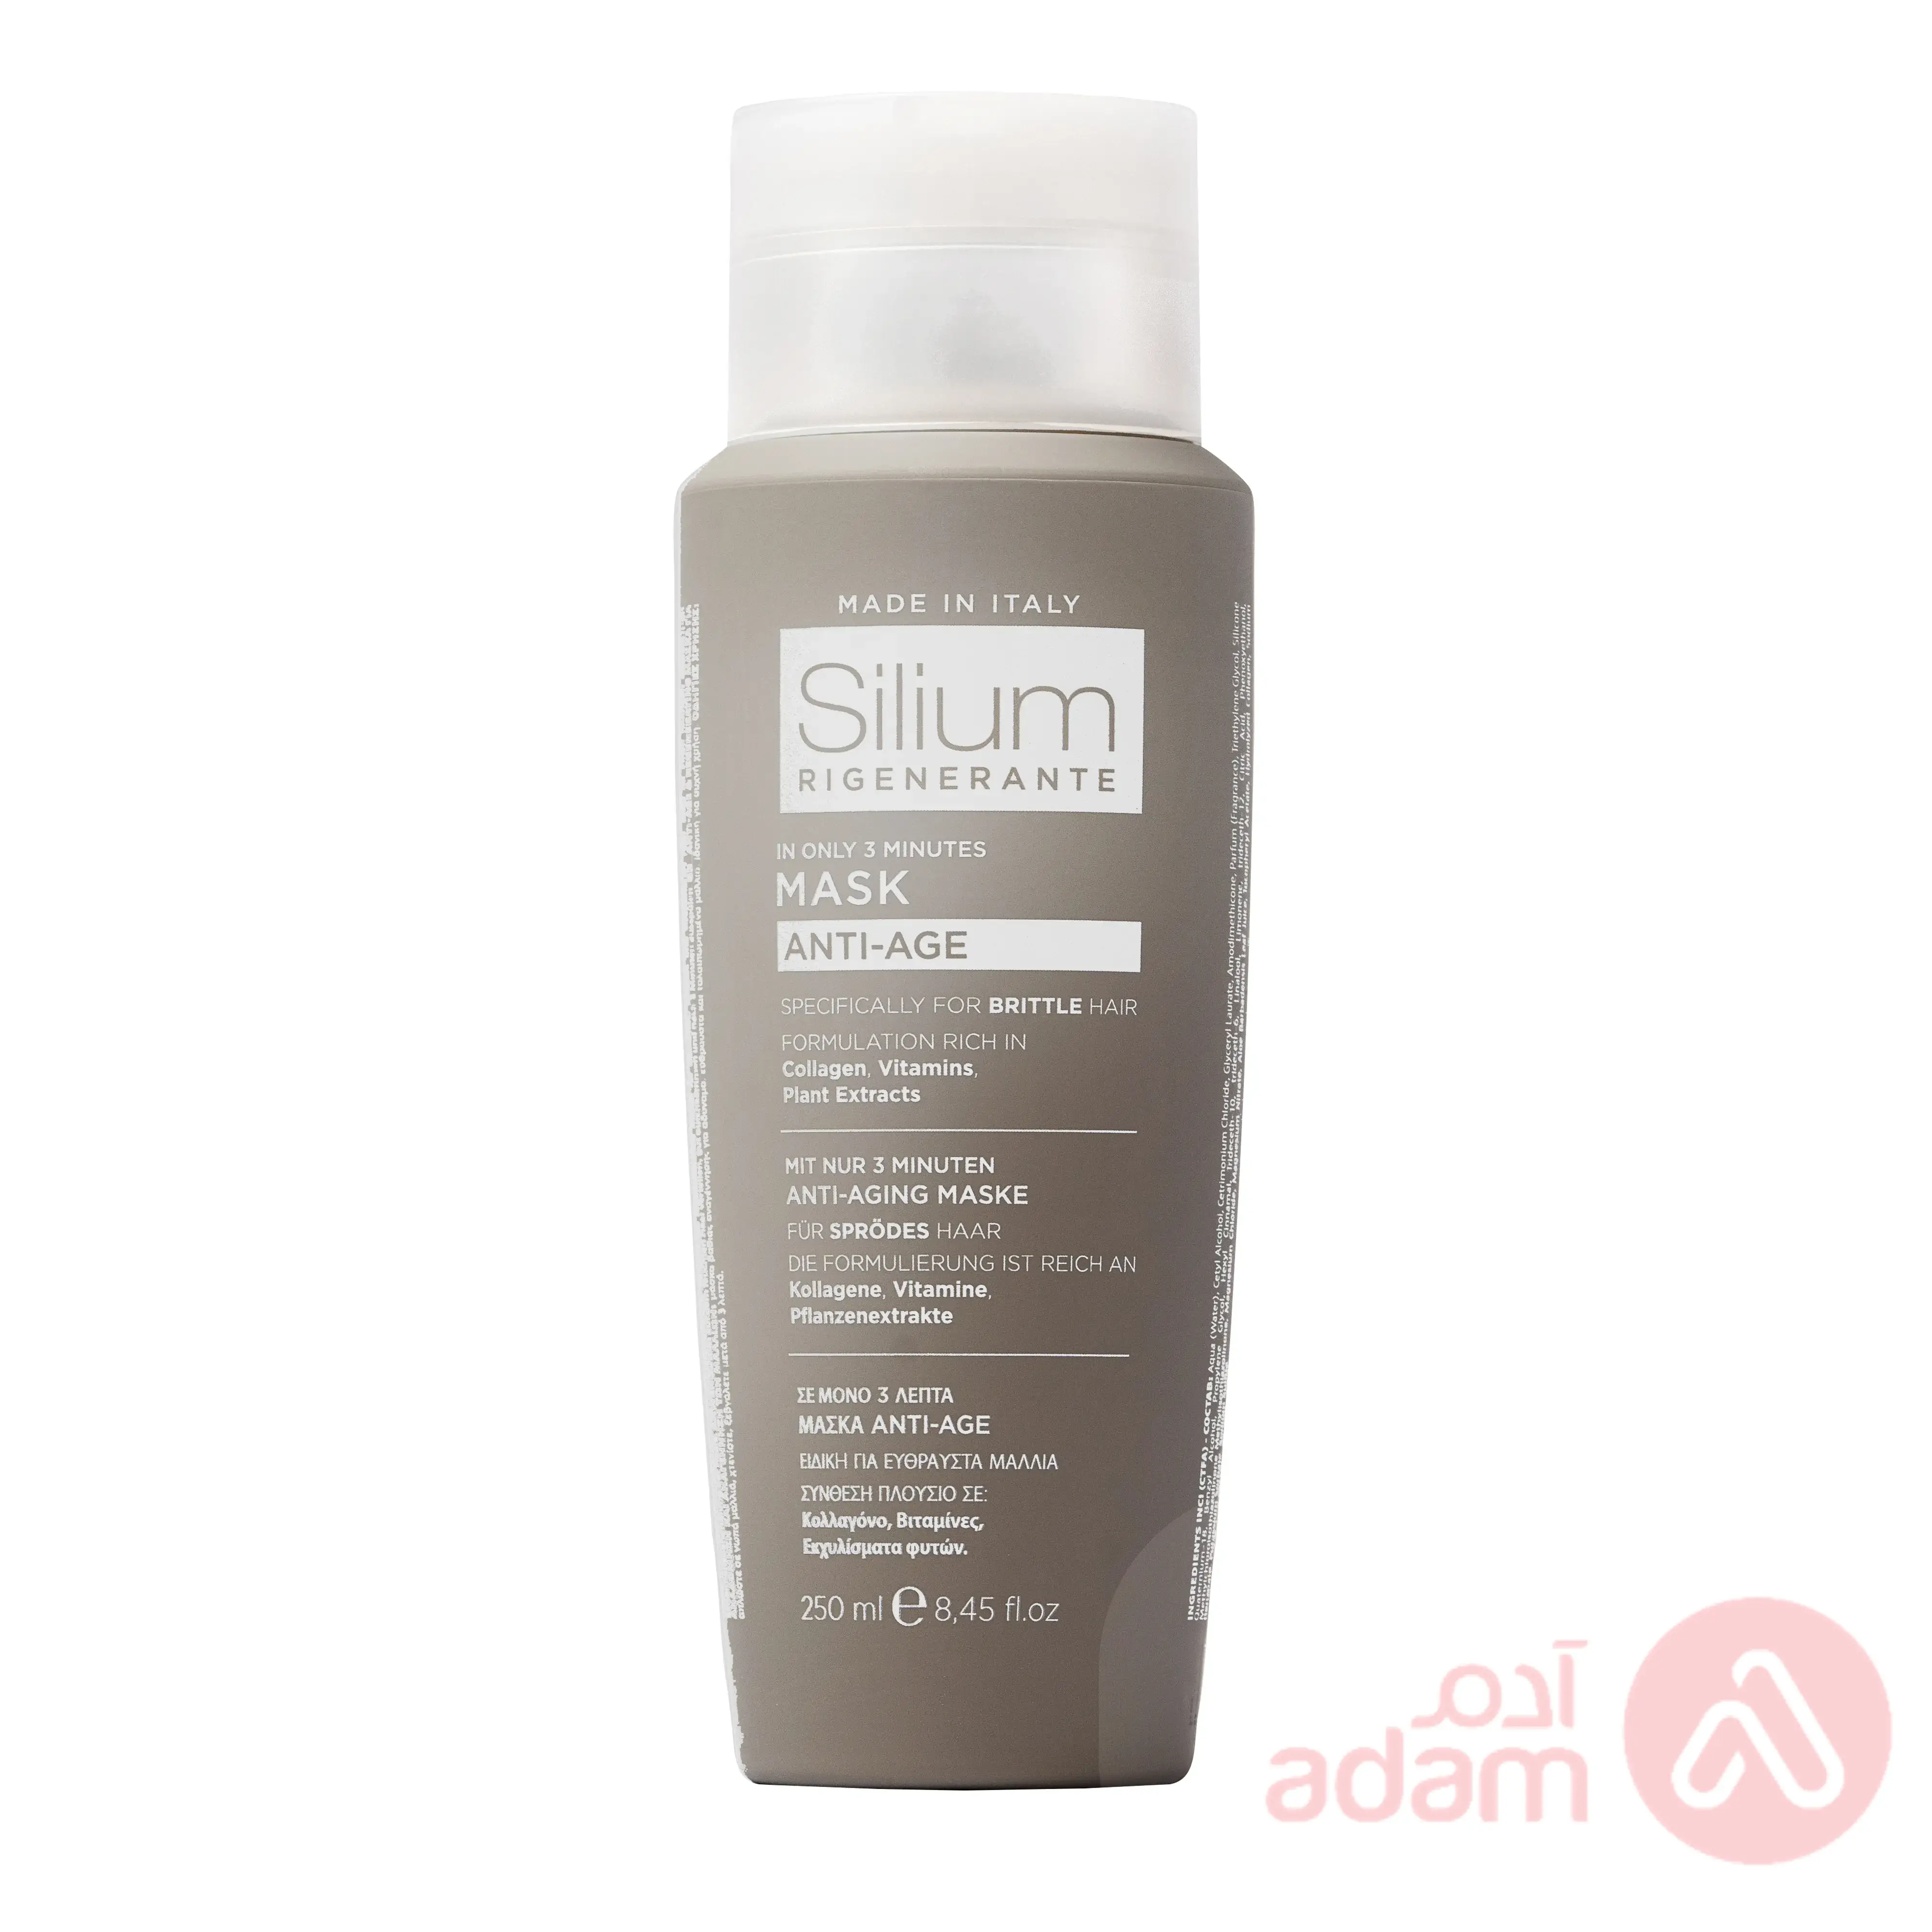 Silium Mask Anti-Age | 250Ml